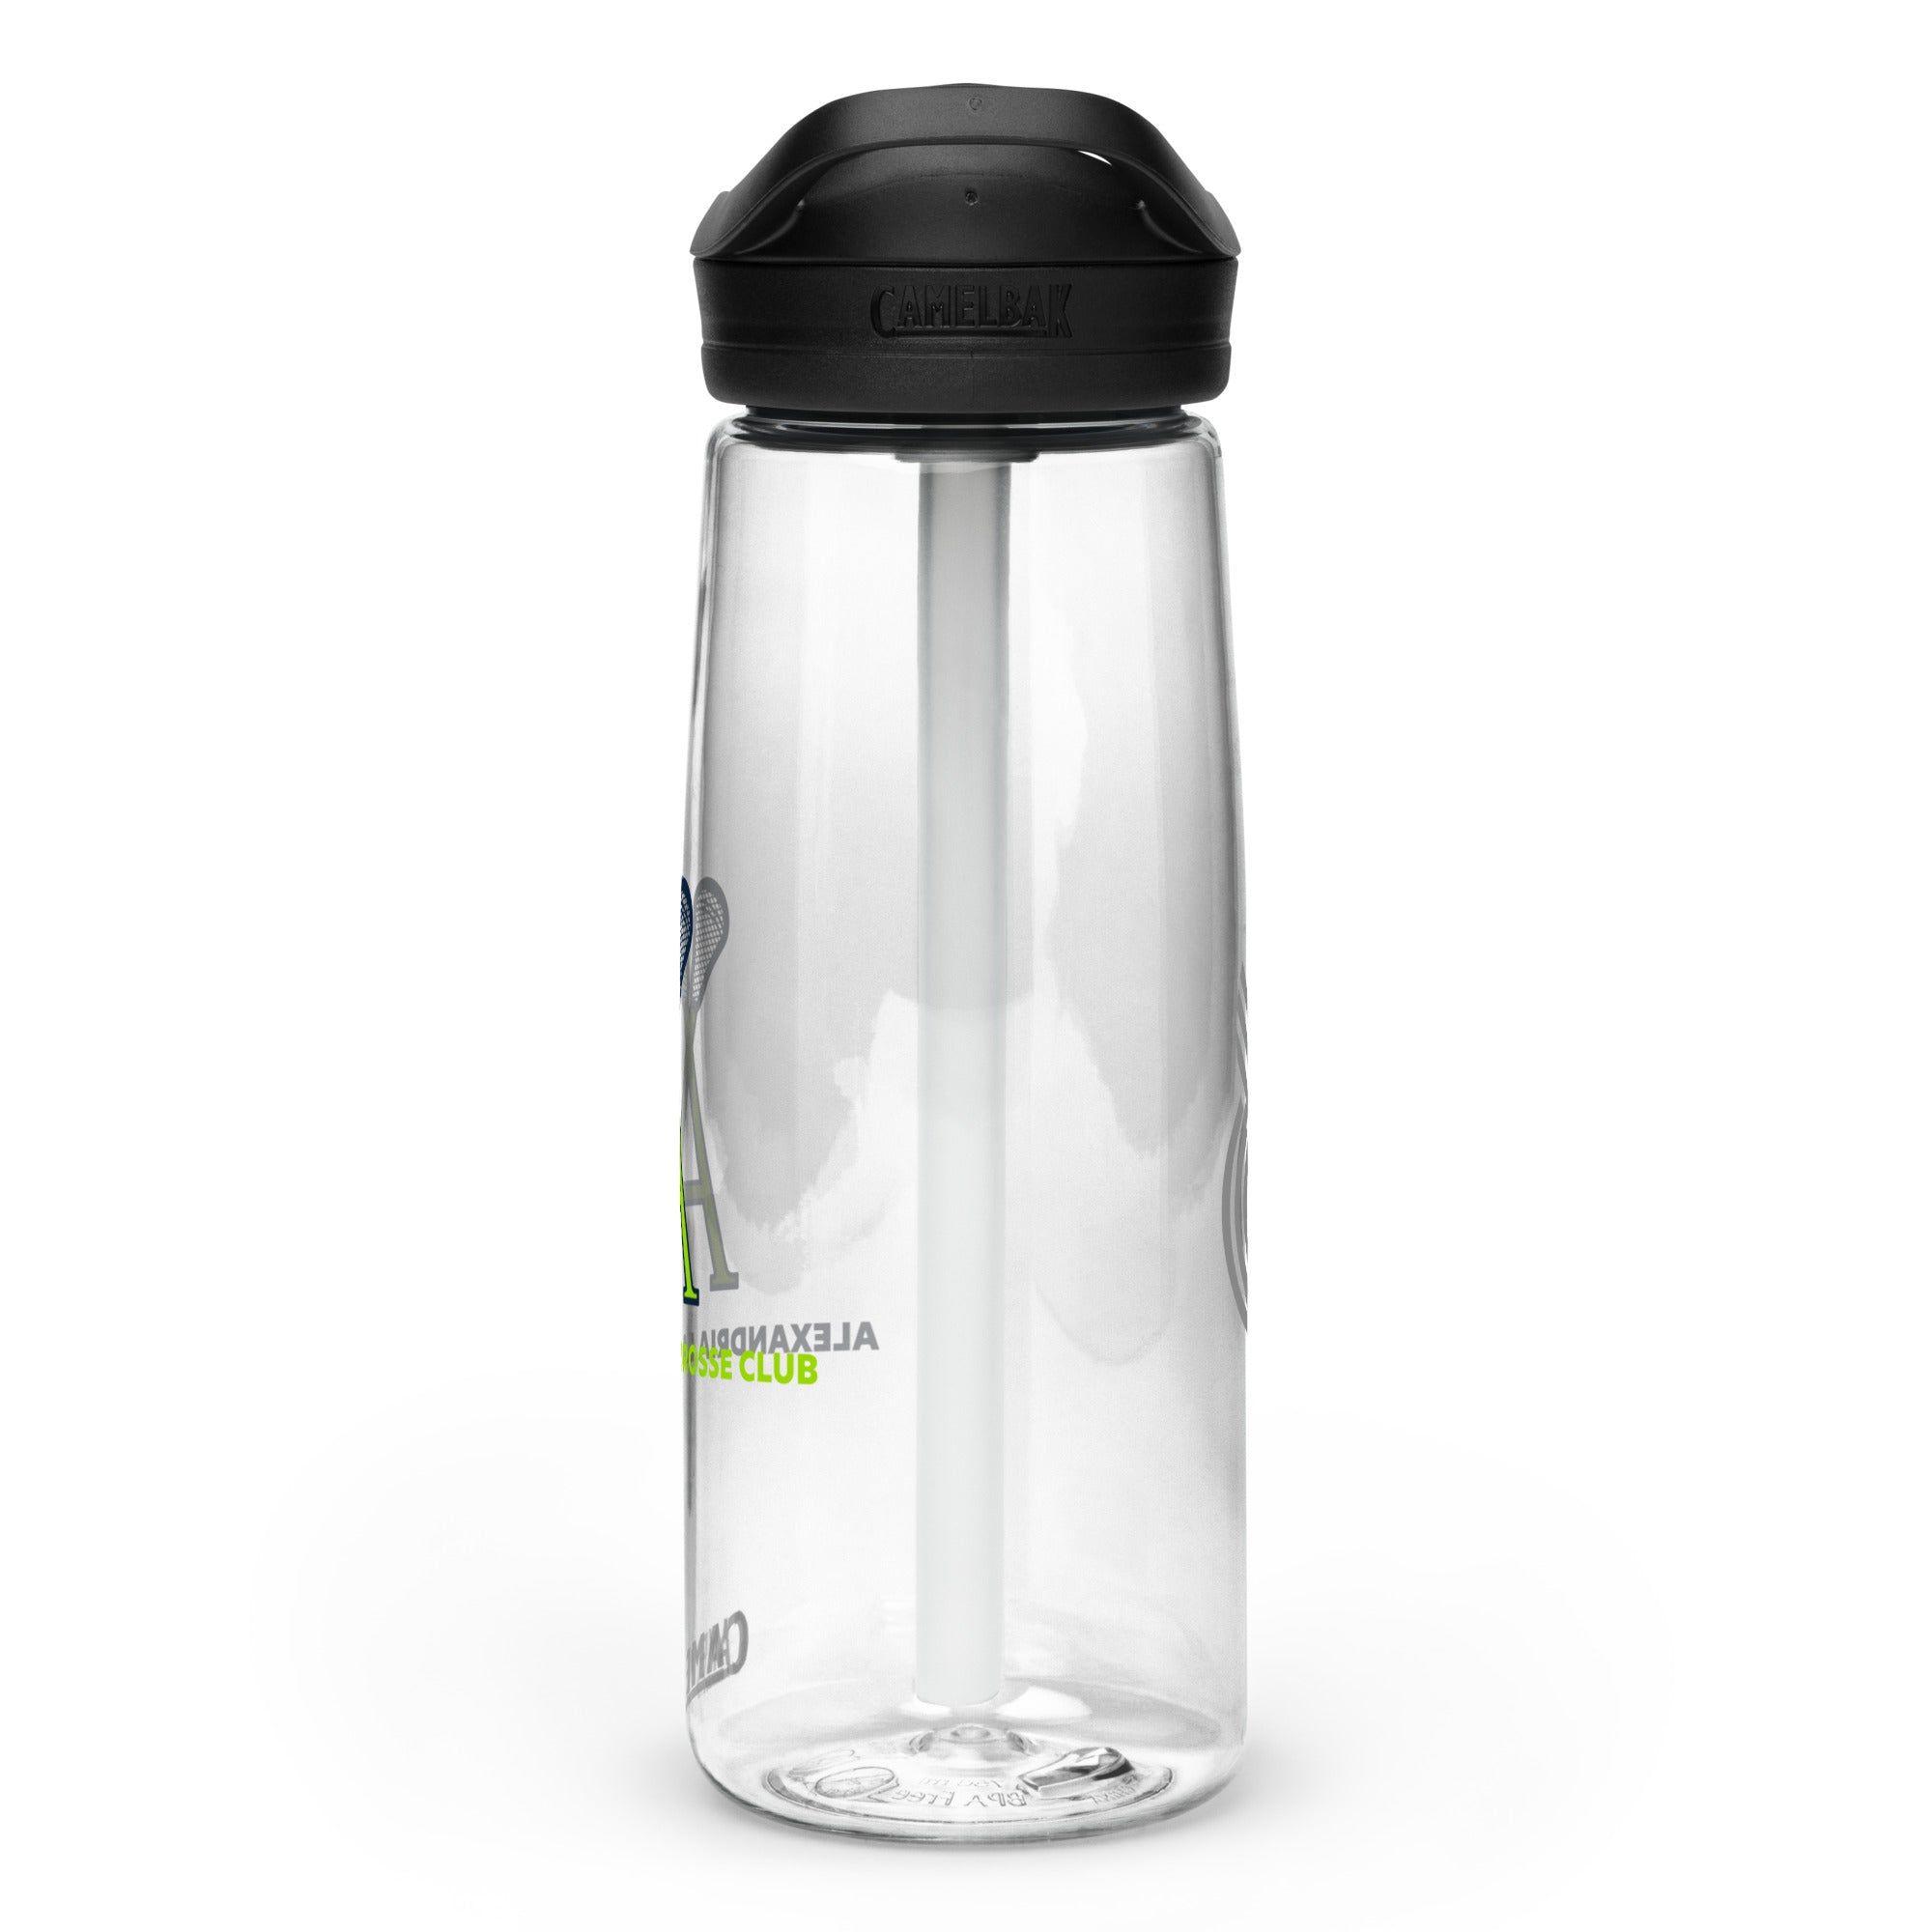 Alexandria Sports water bottle